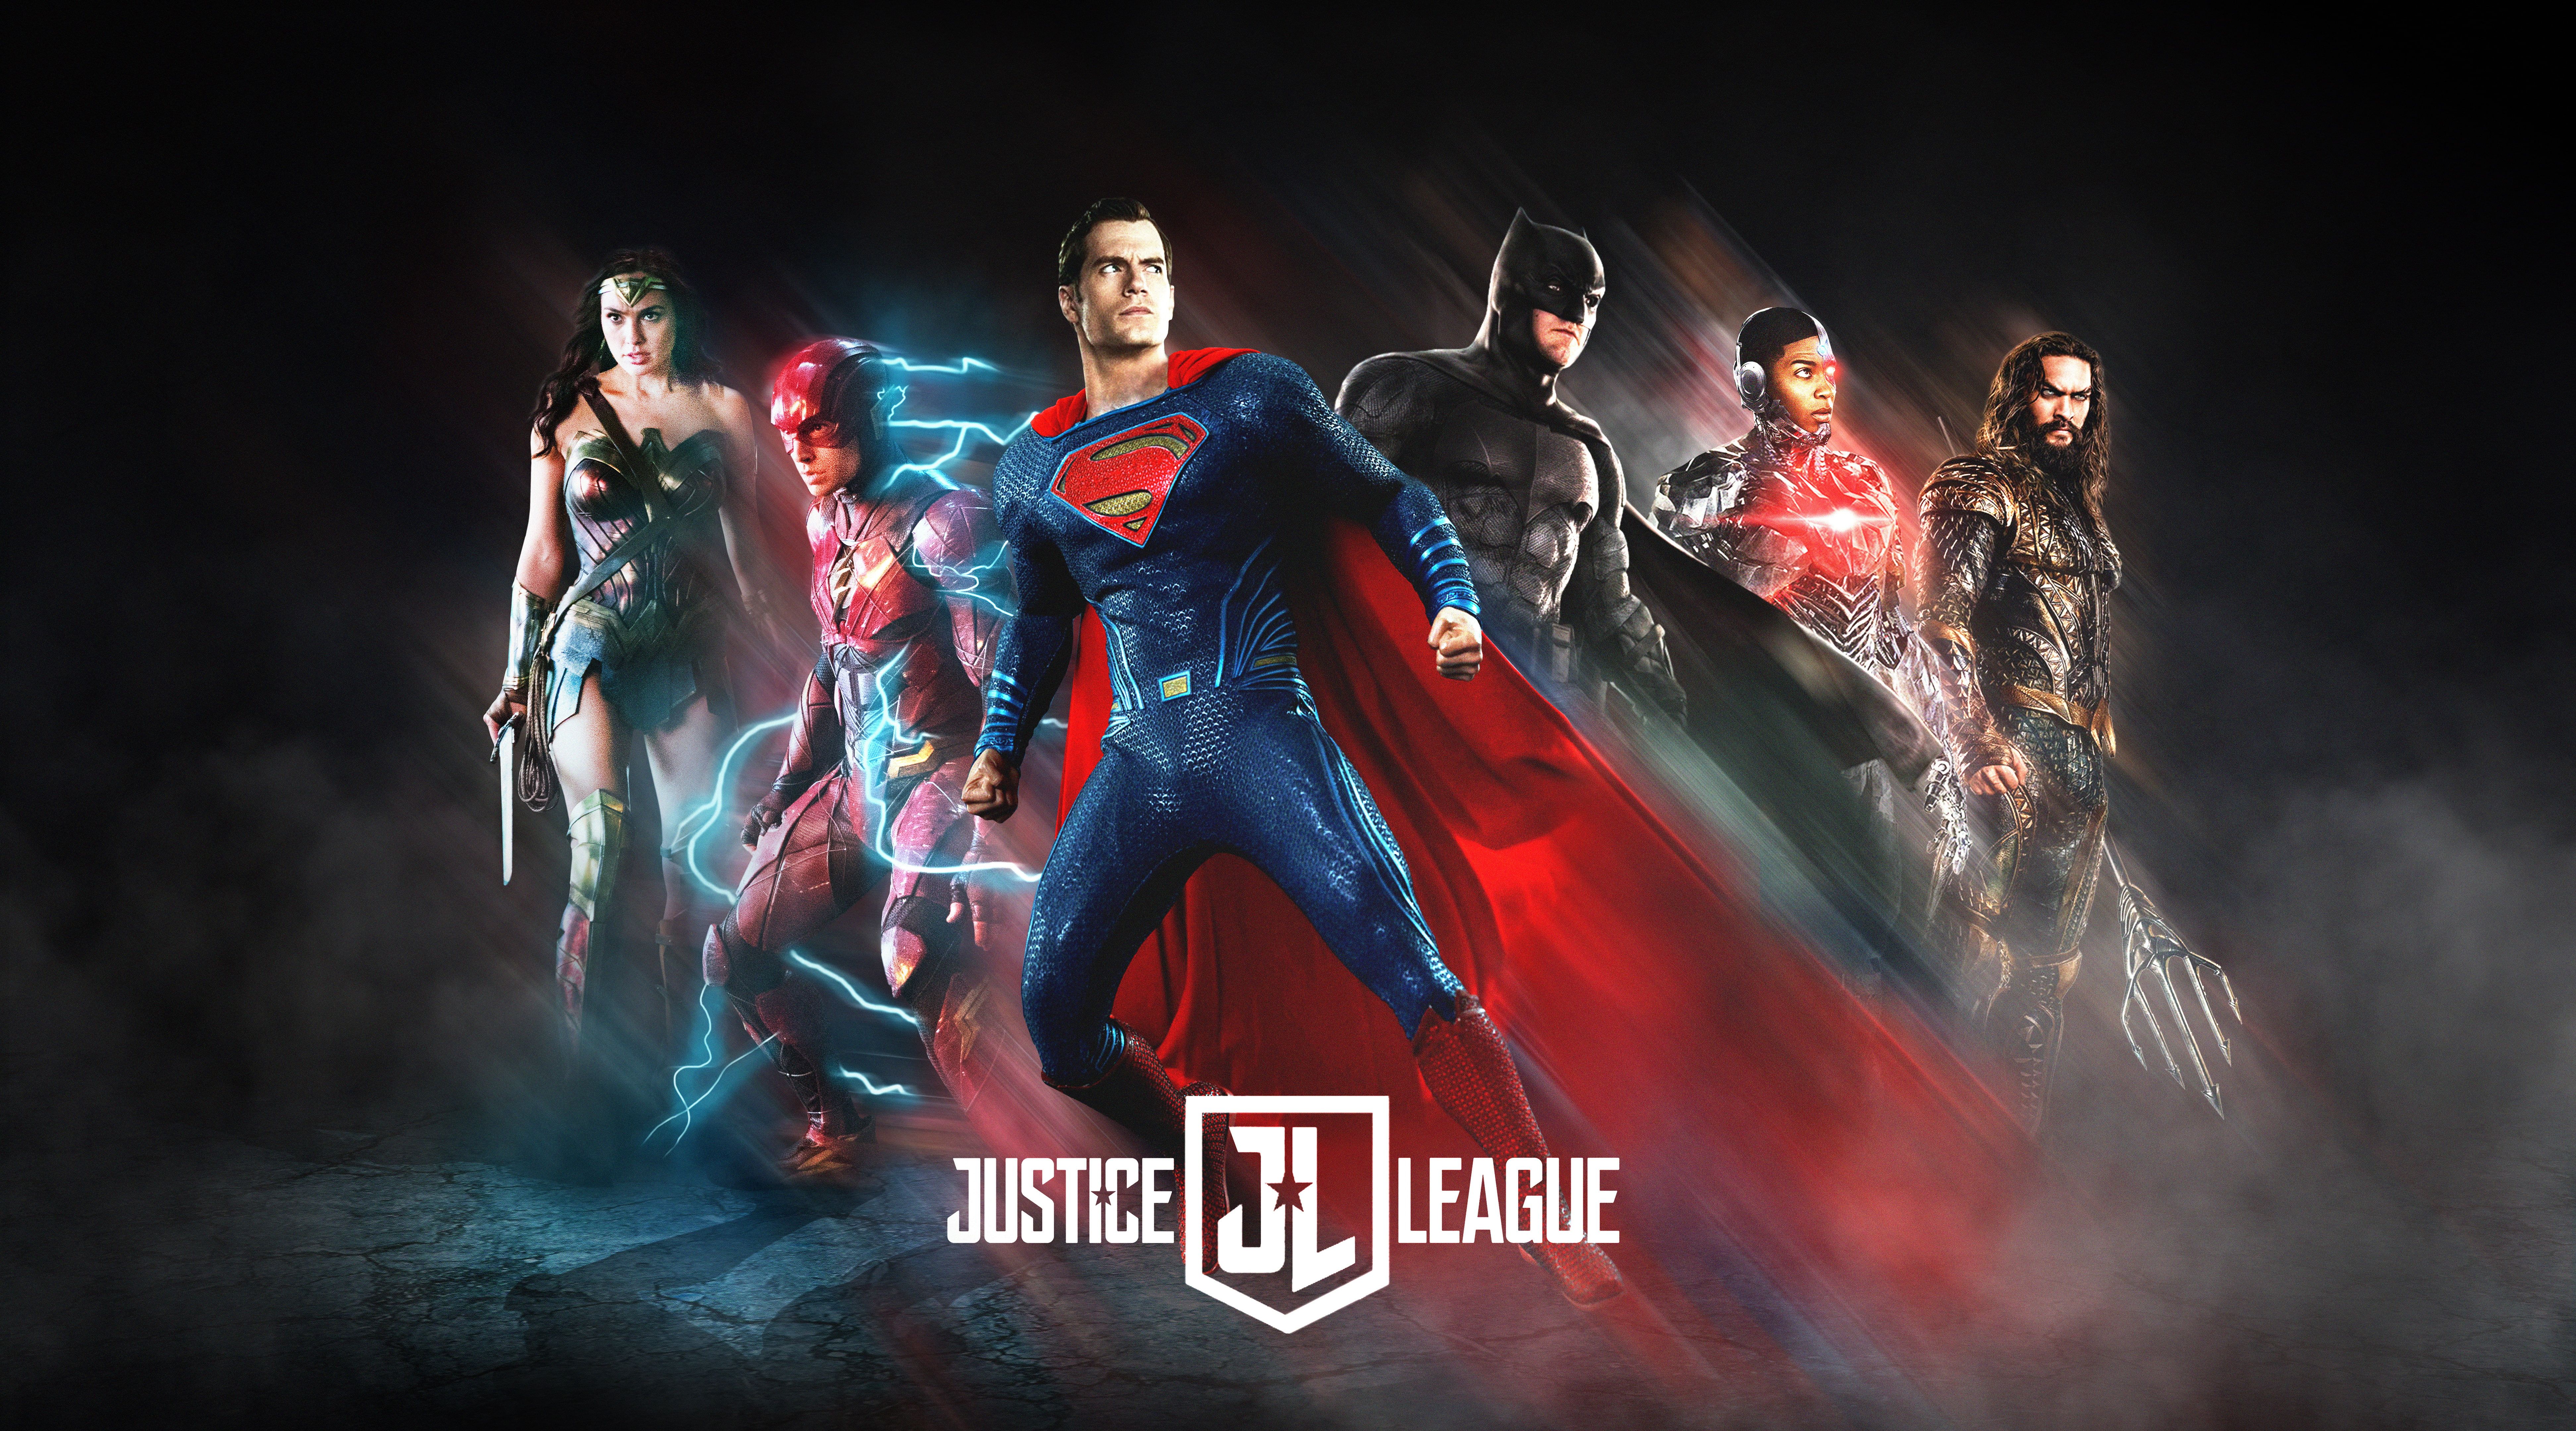 Wonder Woman Aquaman Justice League 2017 Wallpapers